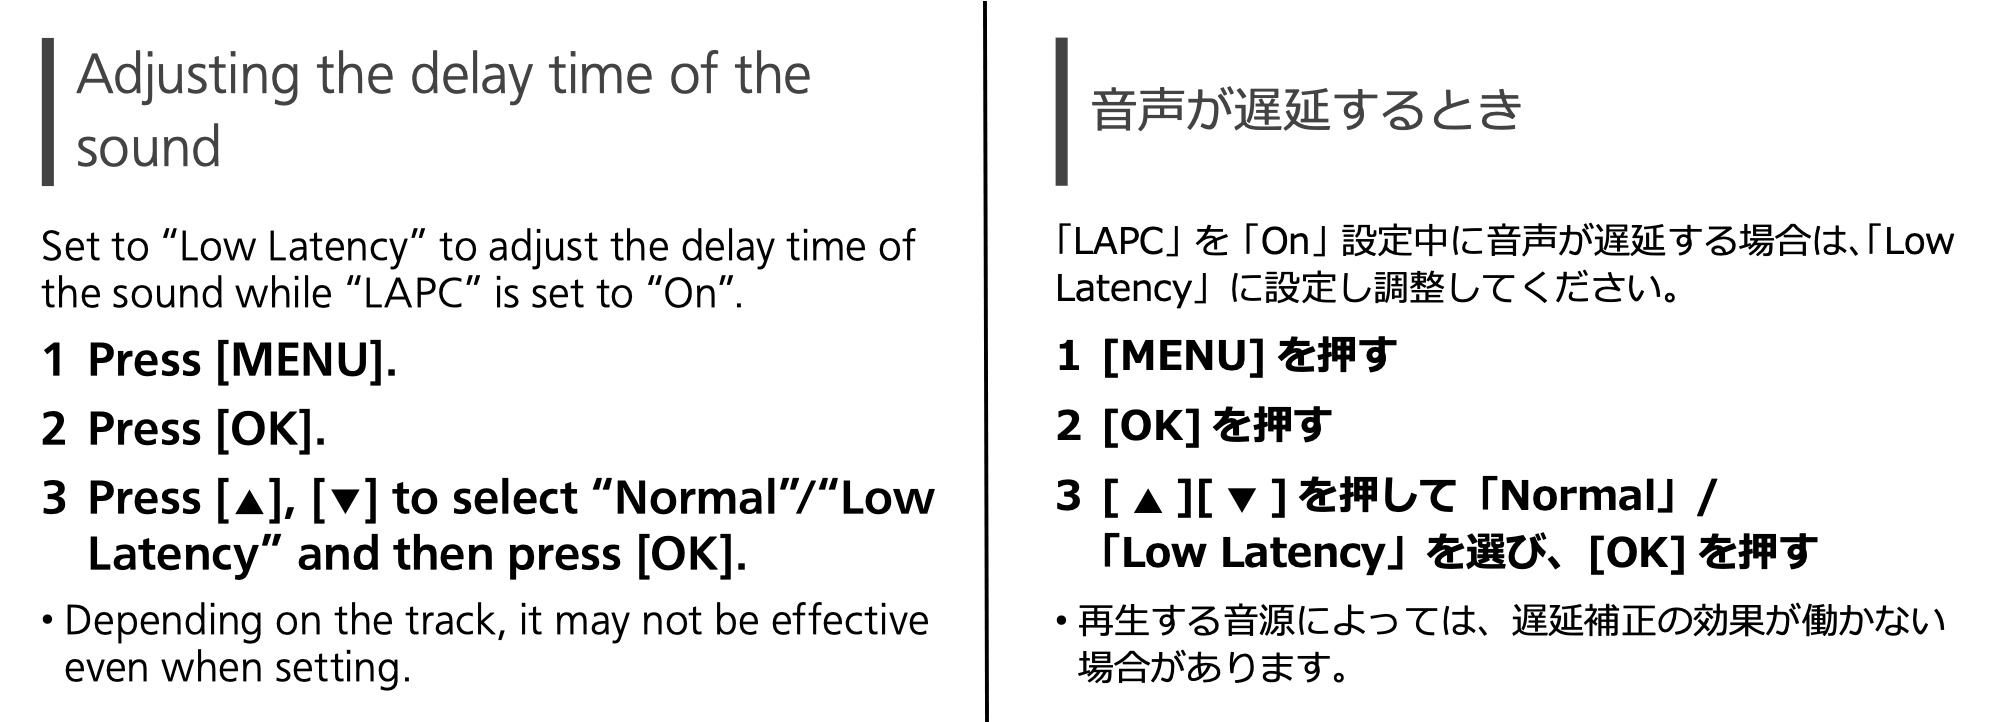 SU-R1000 Manual Low Latency